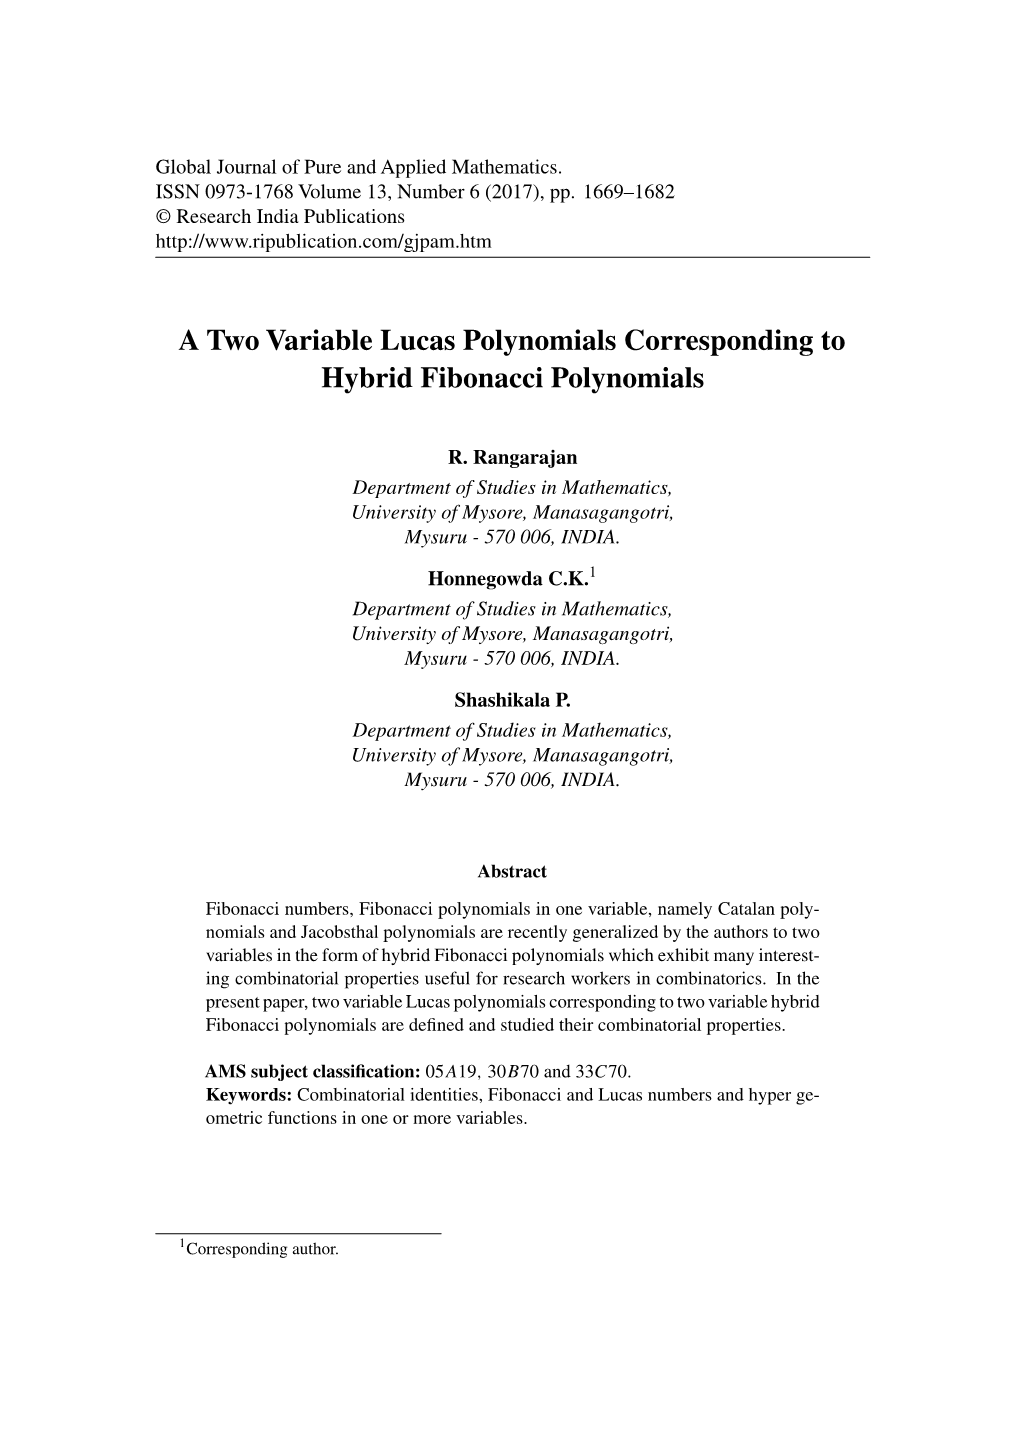 A Two Variable Lucas Polynomials Corresponding to Hybrid Fibonacci Polynomials